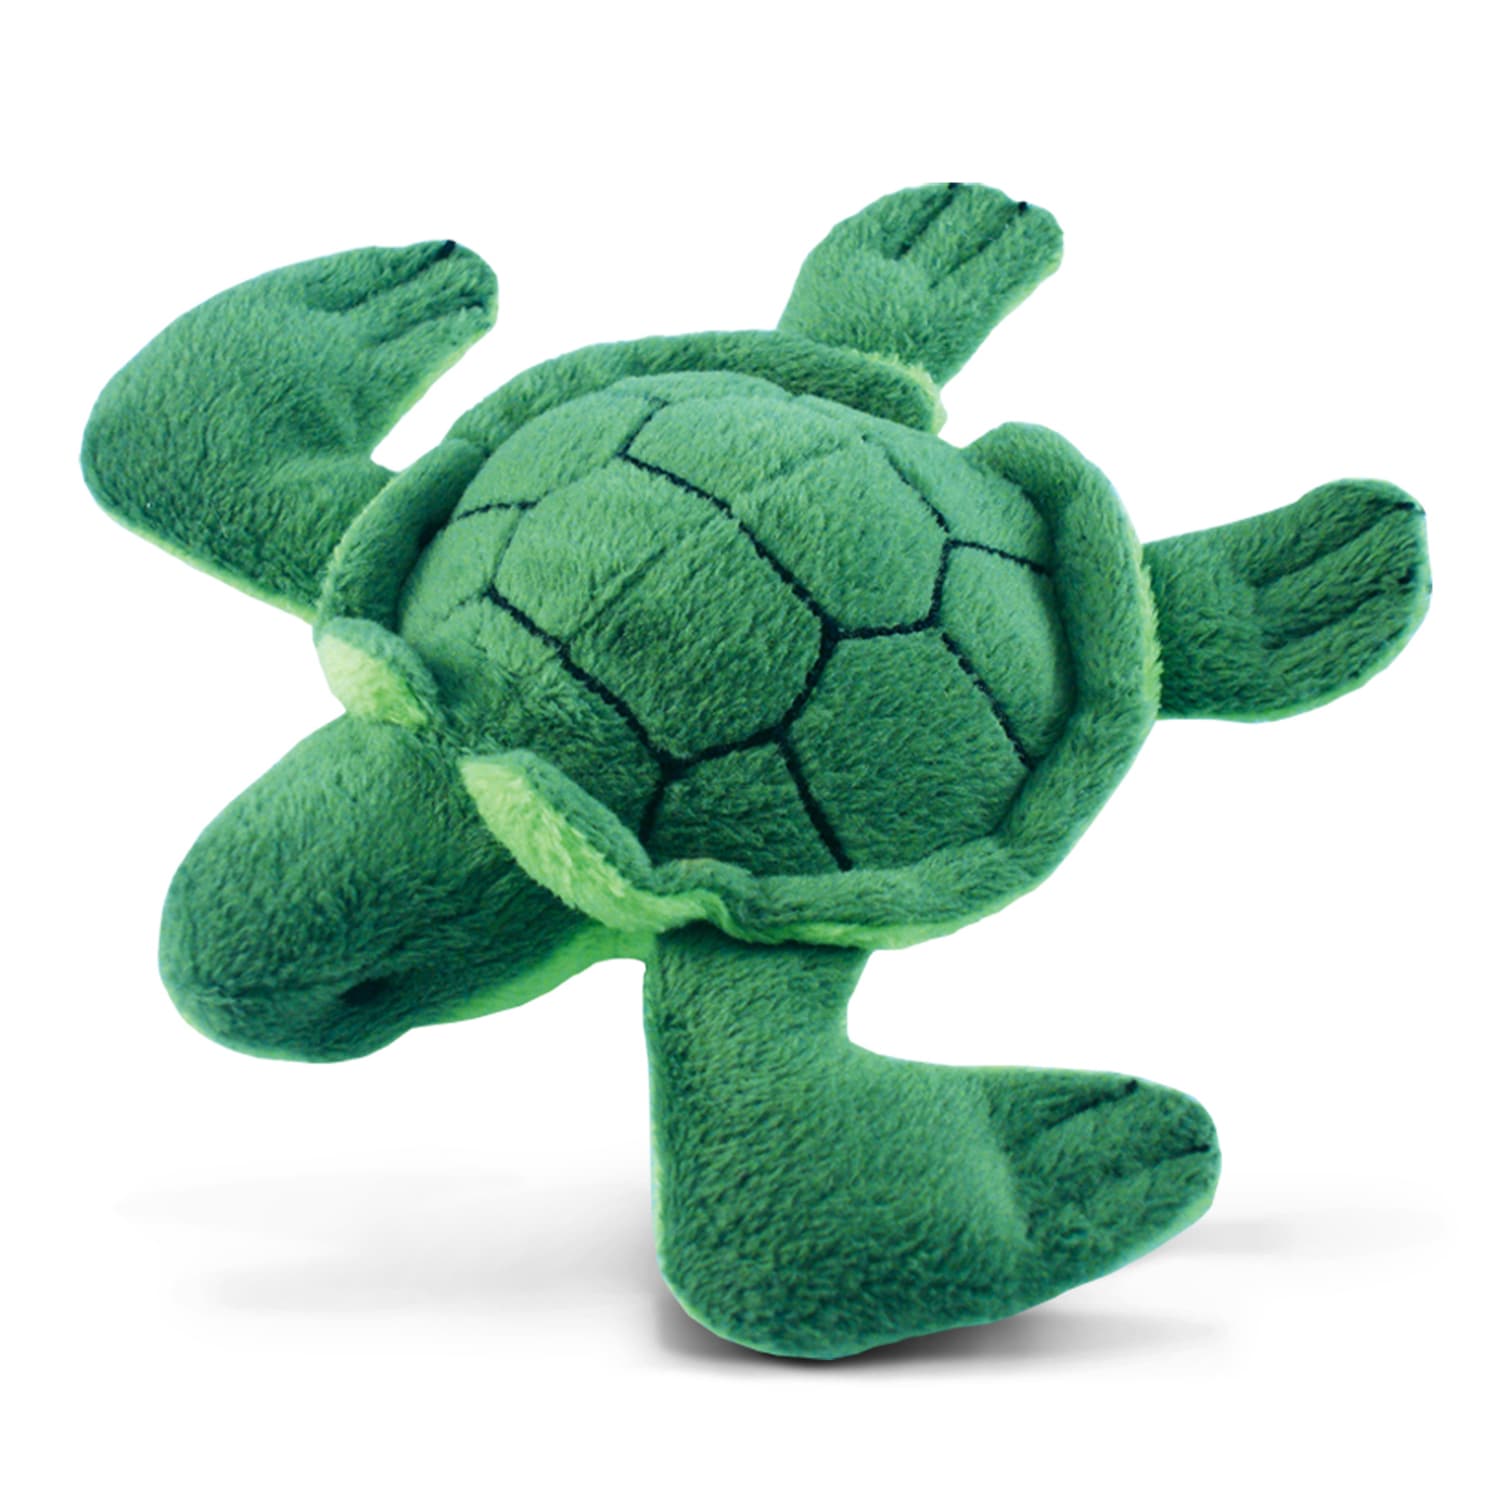 cute turtle plush